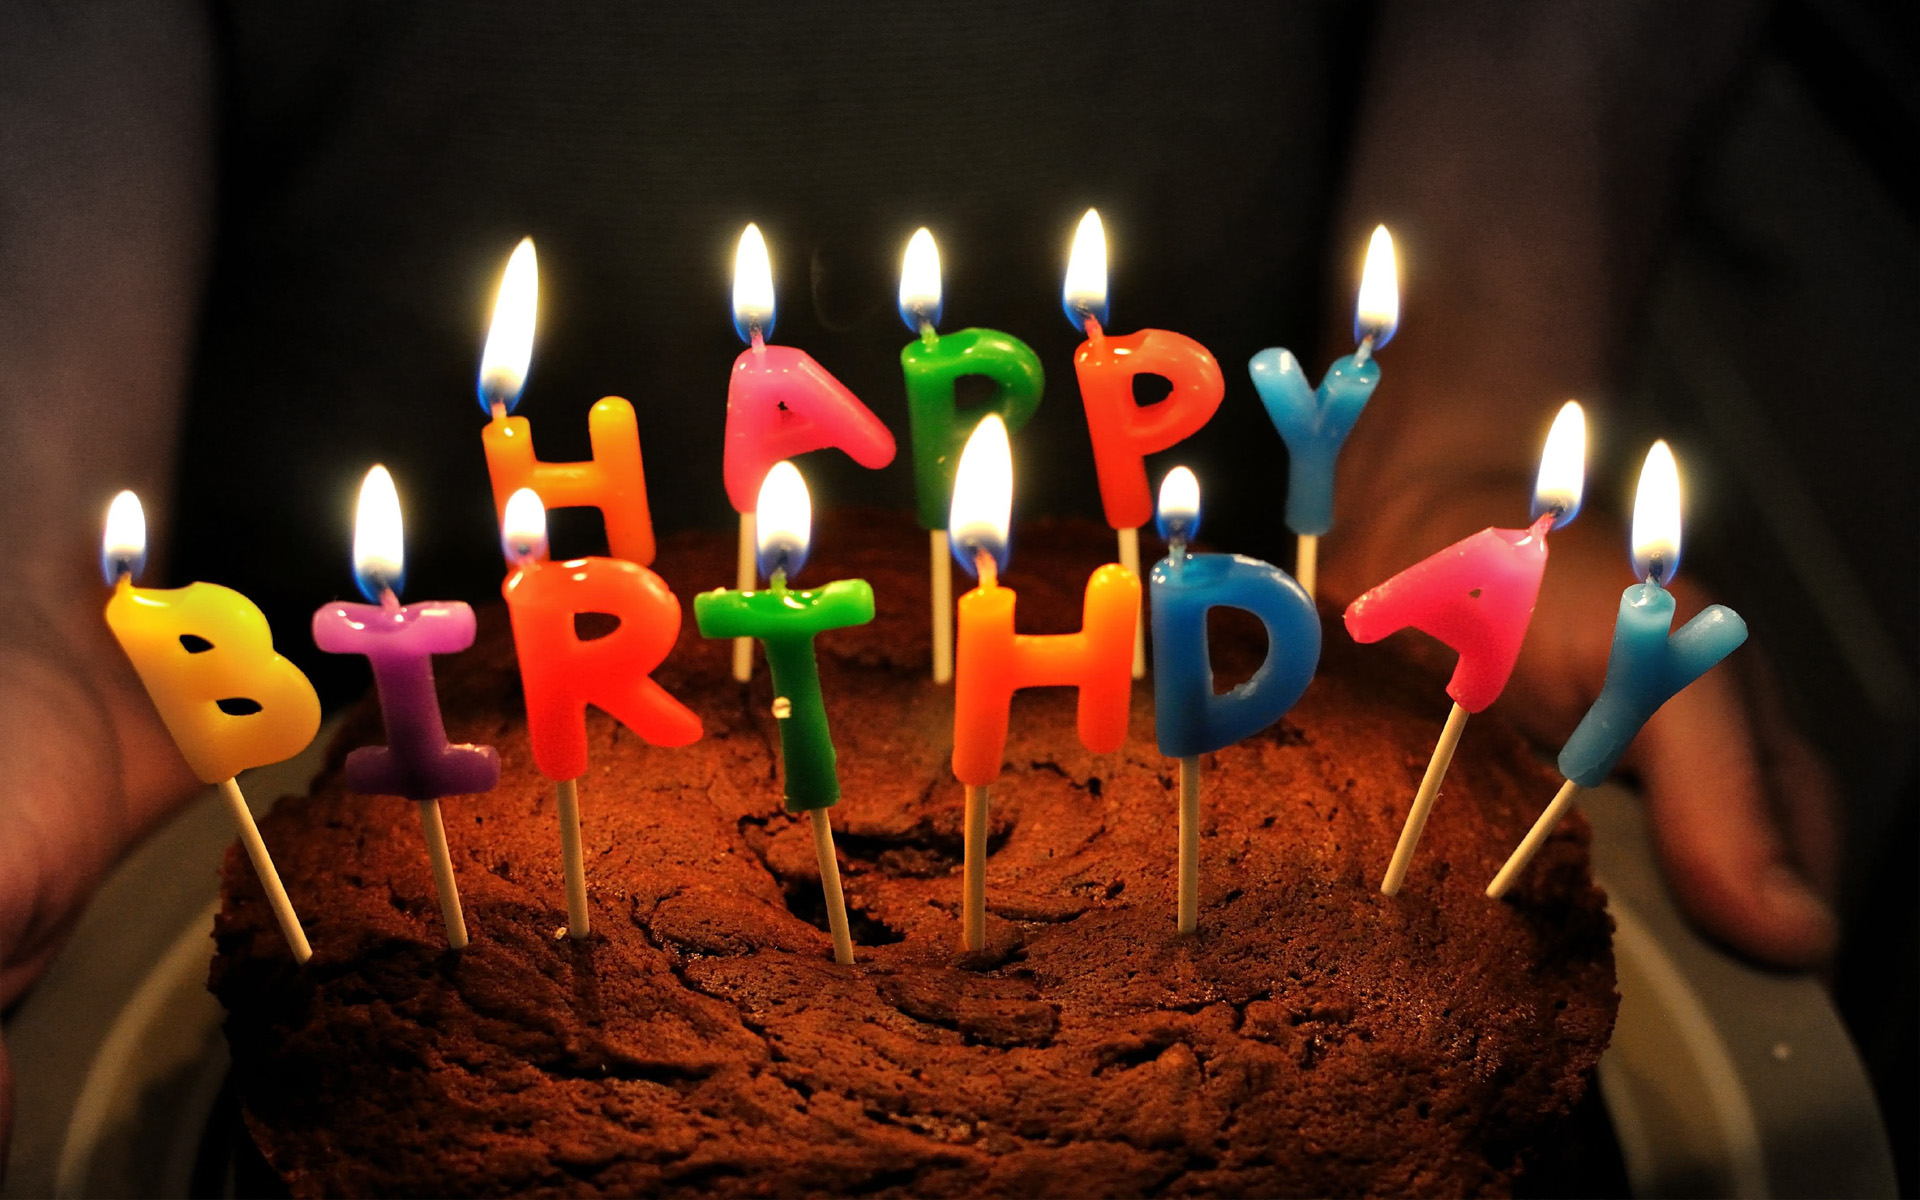 happy birthday wallpaper,cake,birthday cake,candle,lighting,birthday